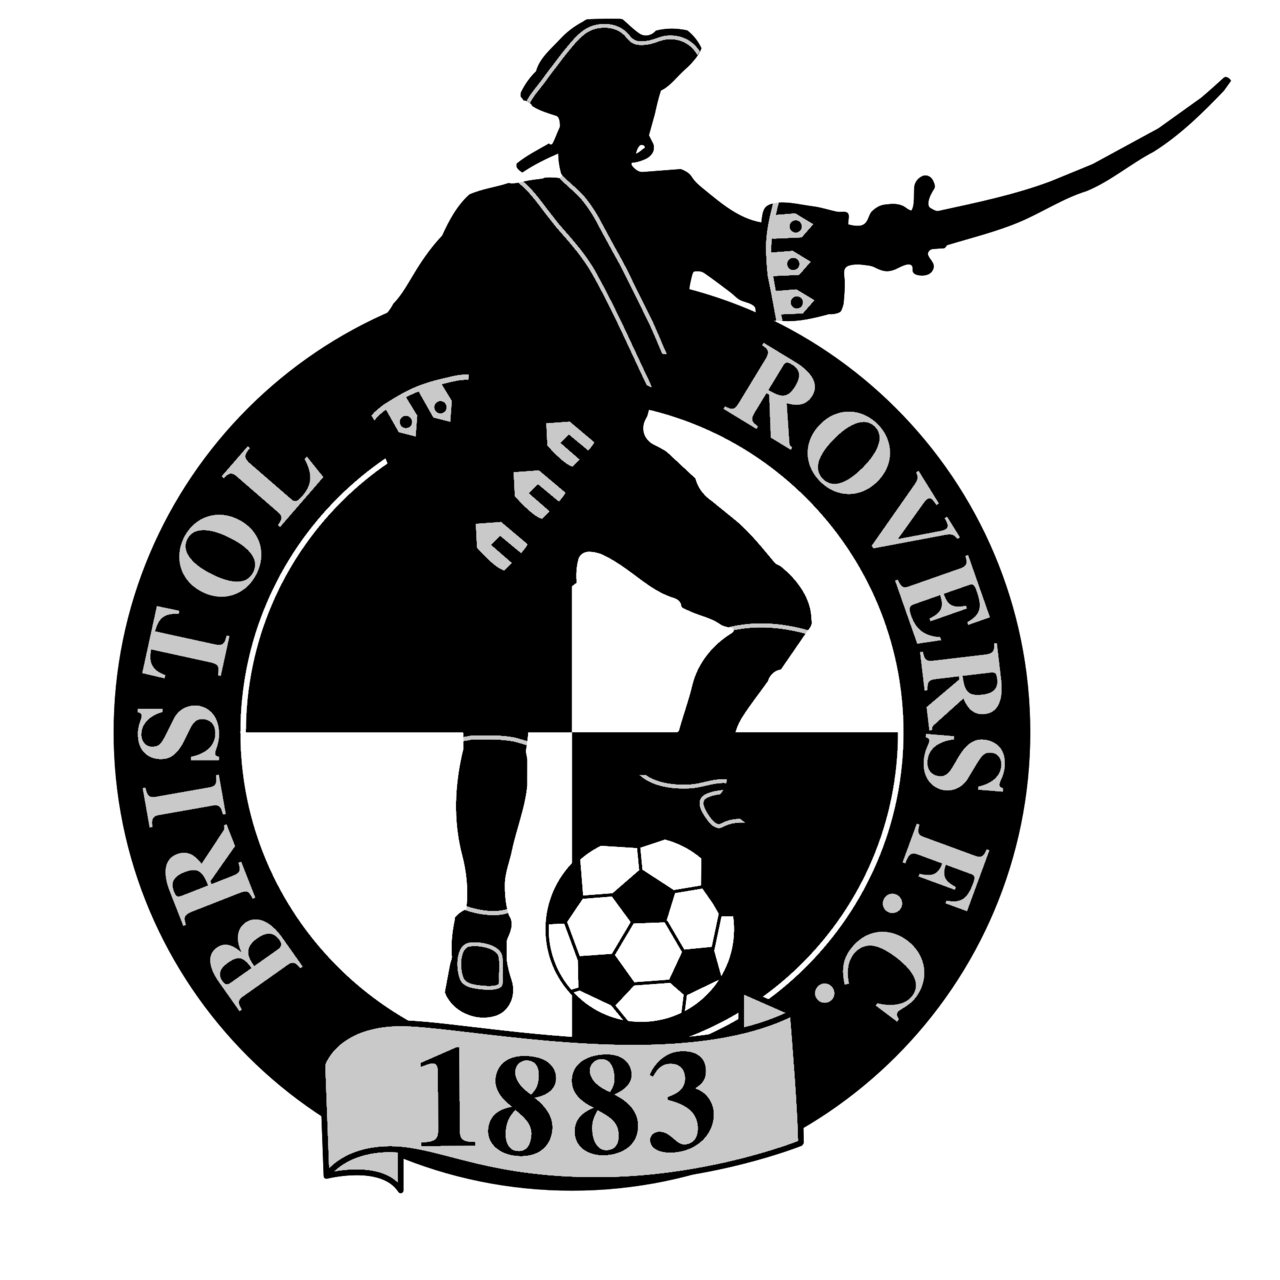 bristol-rovers-fc-logo-black-and-white